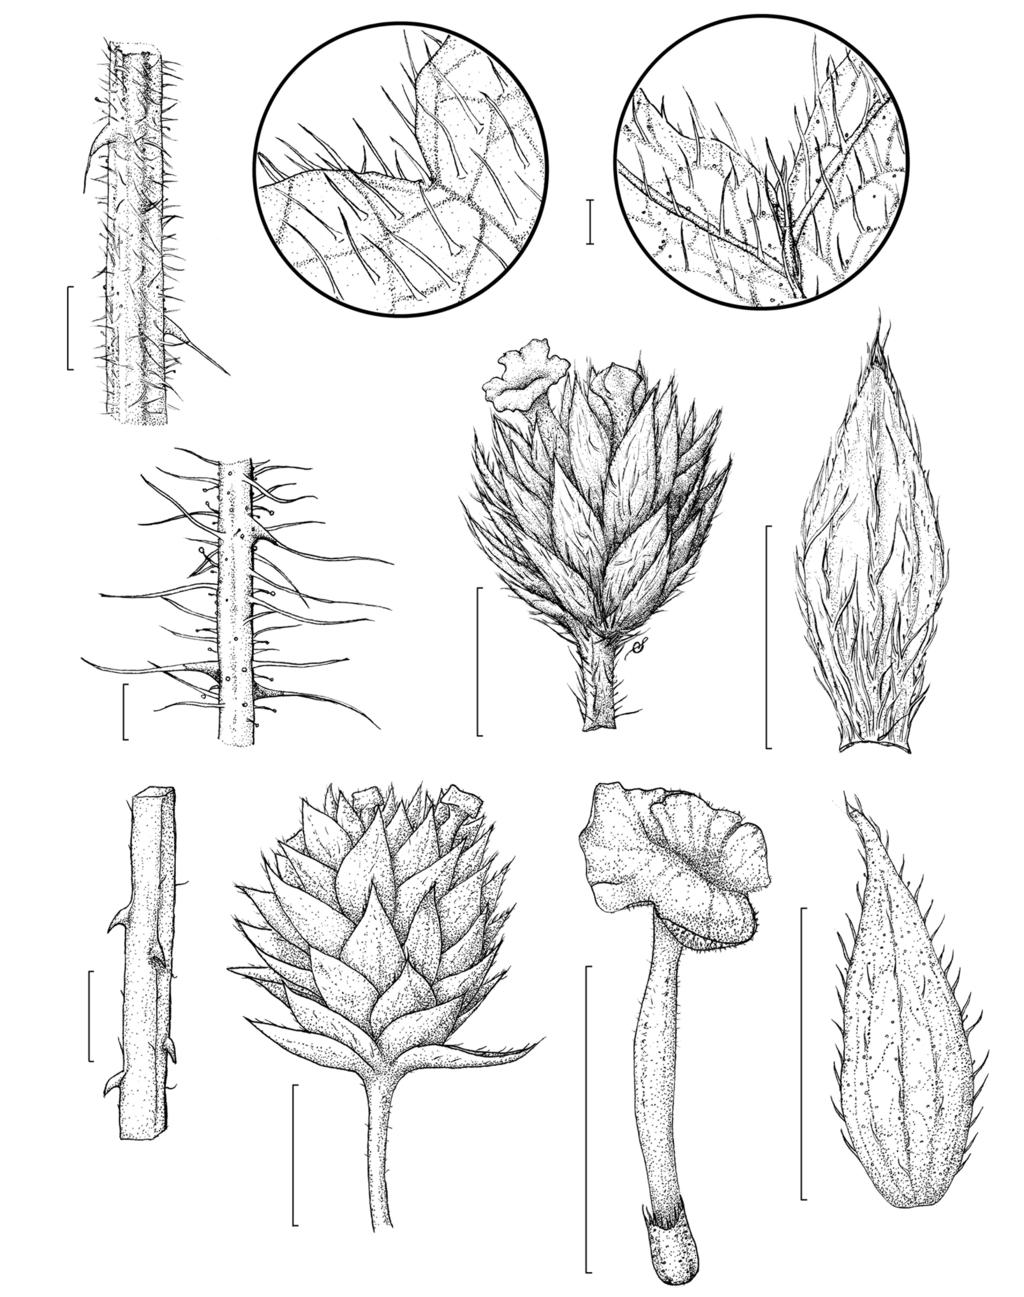 Verbenaceae de Carajás 1 mm 1399 c b 2 mm a e f g 2 mm d j h i Figura 1 a-f. Lantana hirsuta subsp. amazonica a. ramo; b. detalhe da face adaxial da lâmina foliar; c.